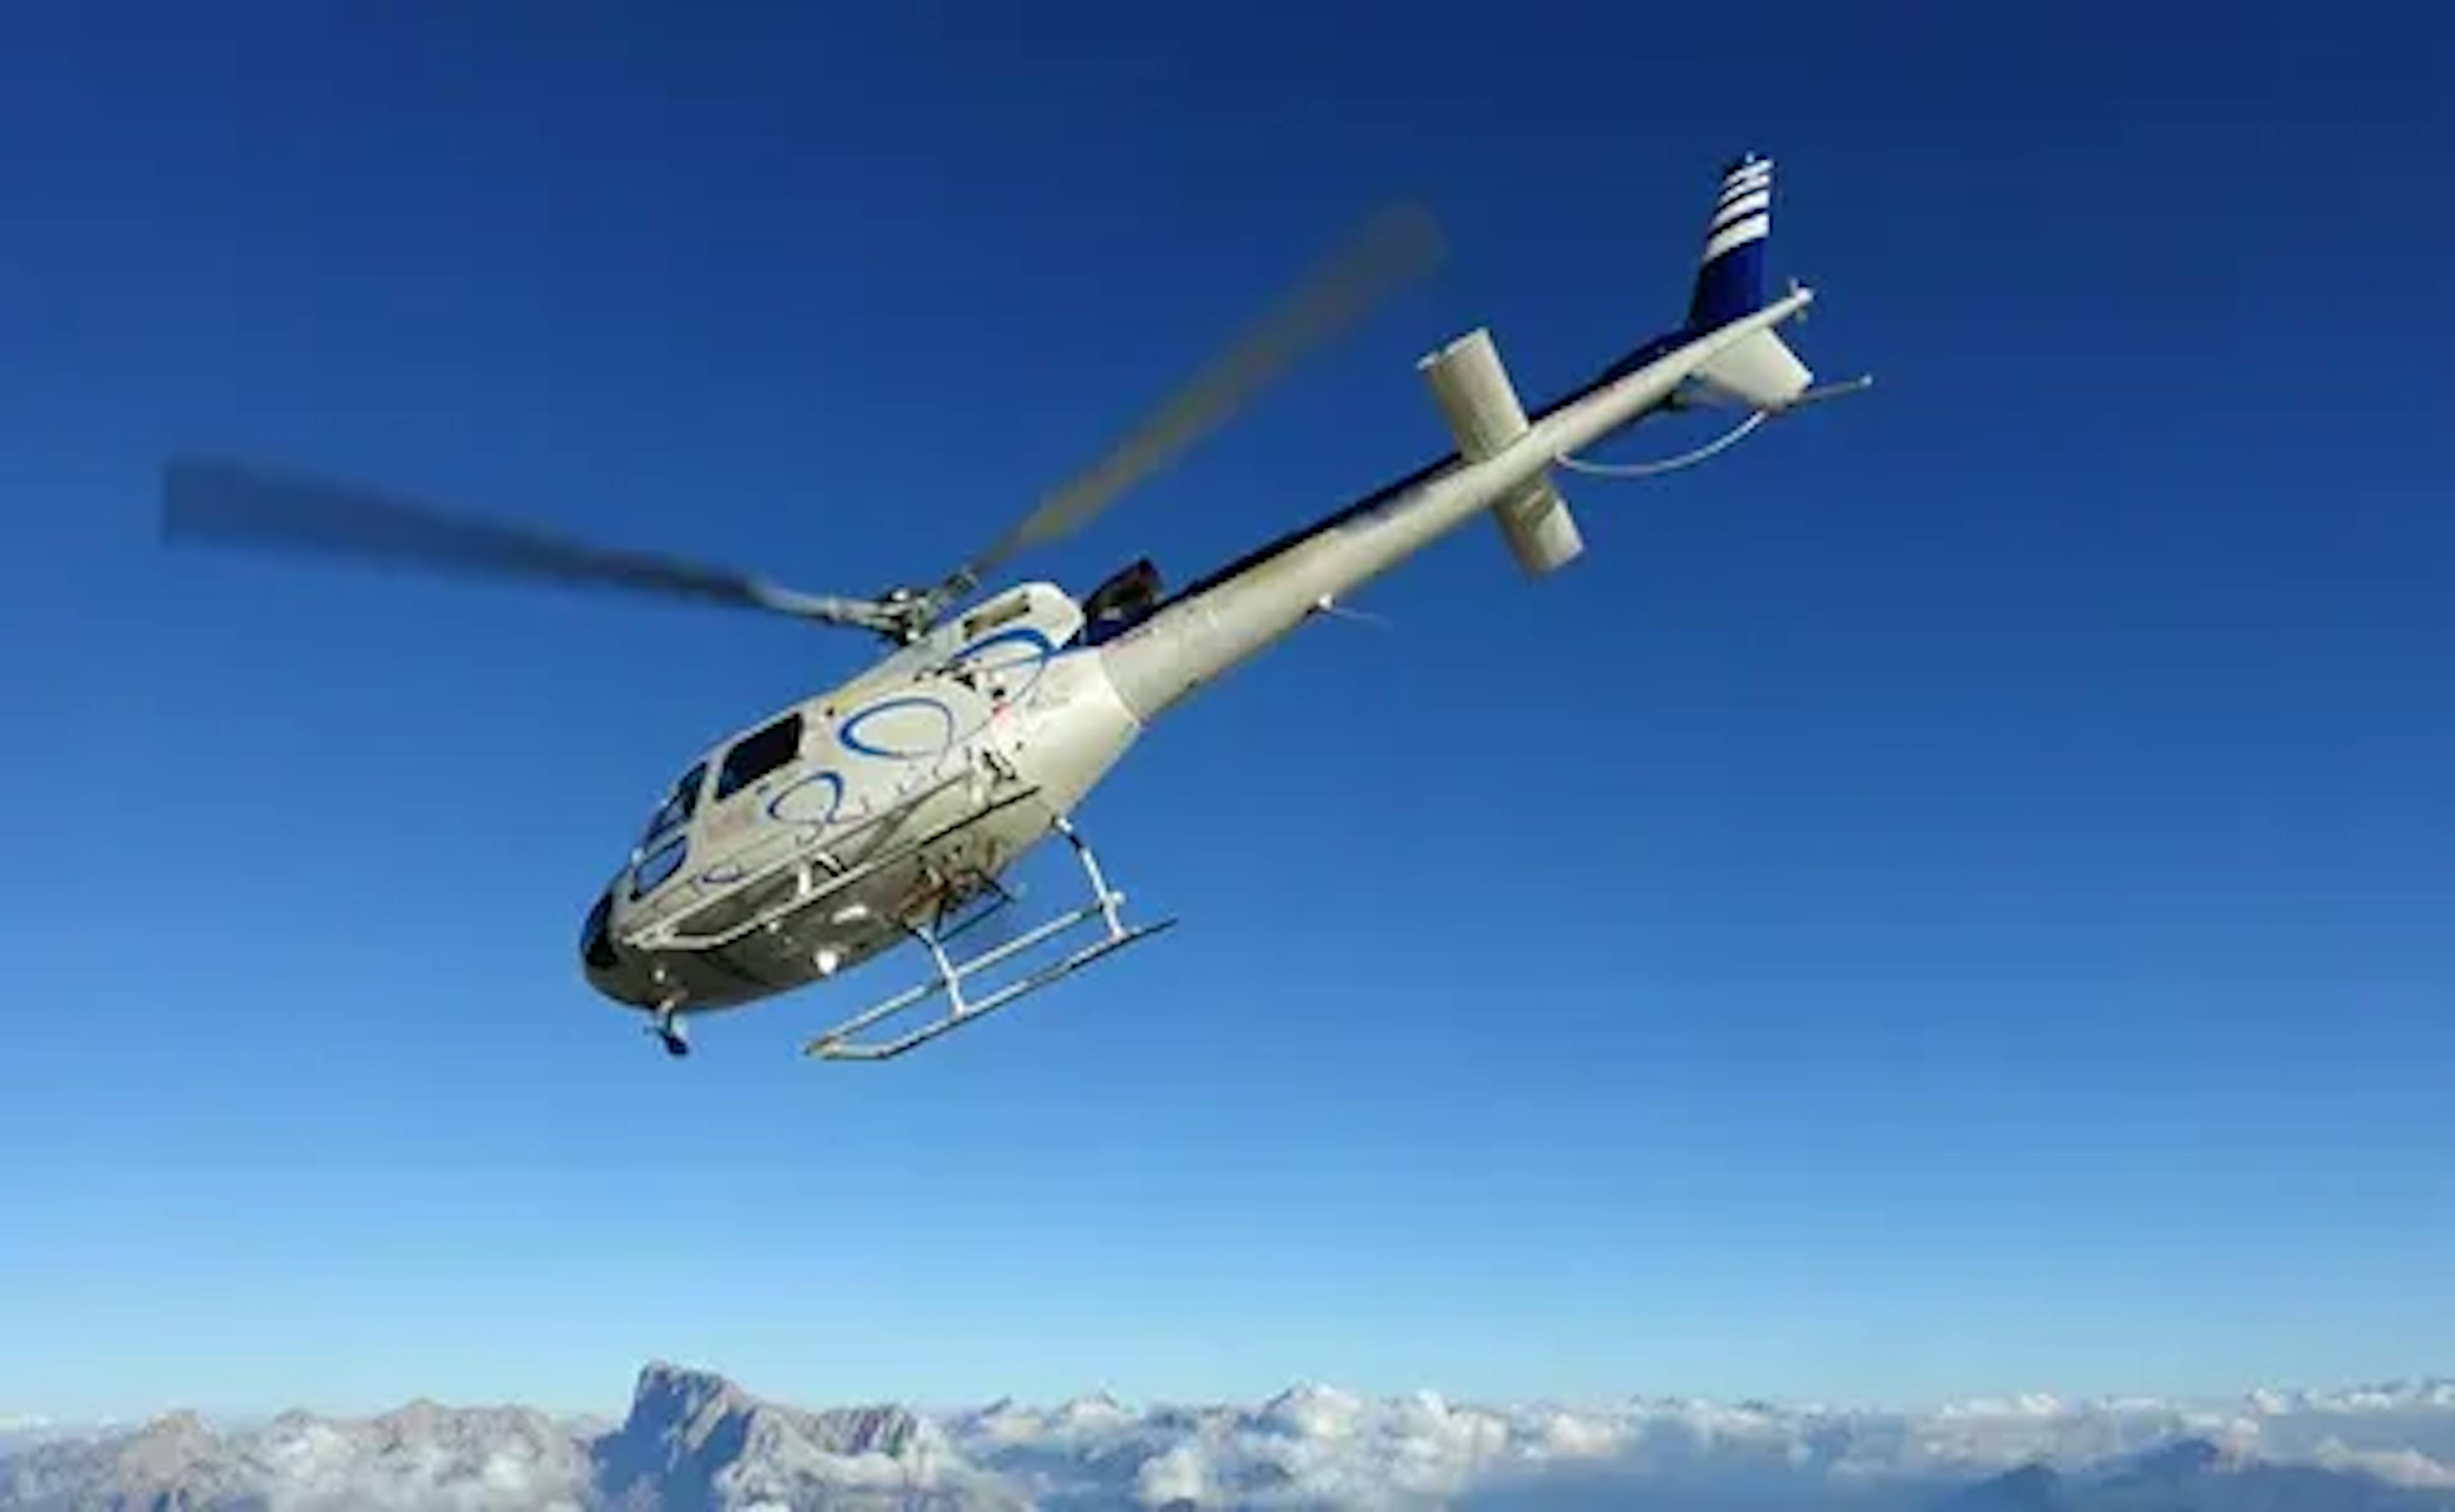 Jura und Berner Seeland Rundflug Helikopter 54 Minuten